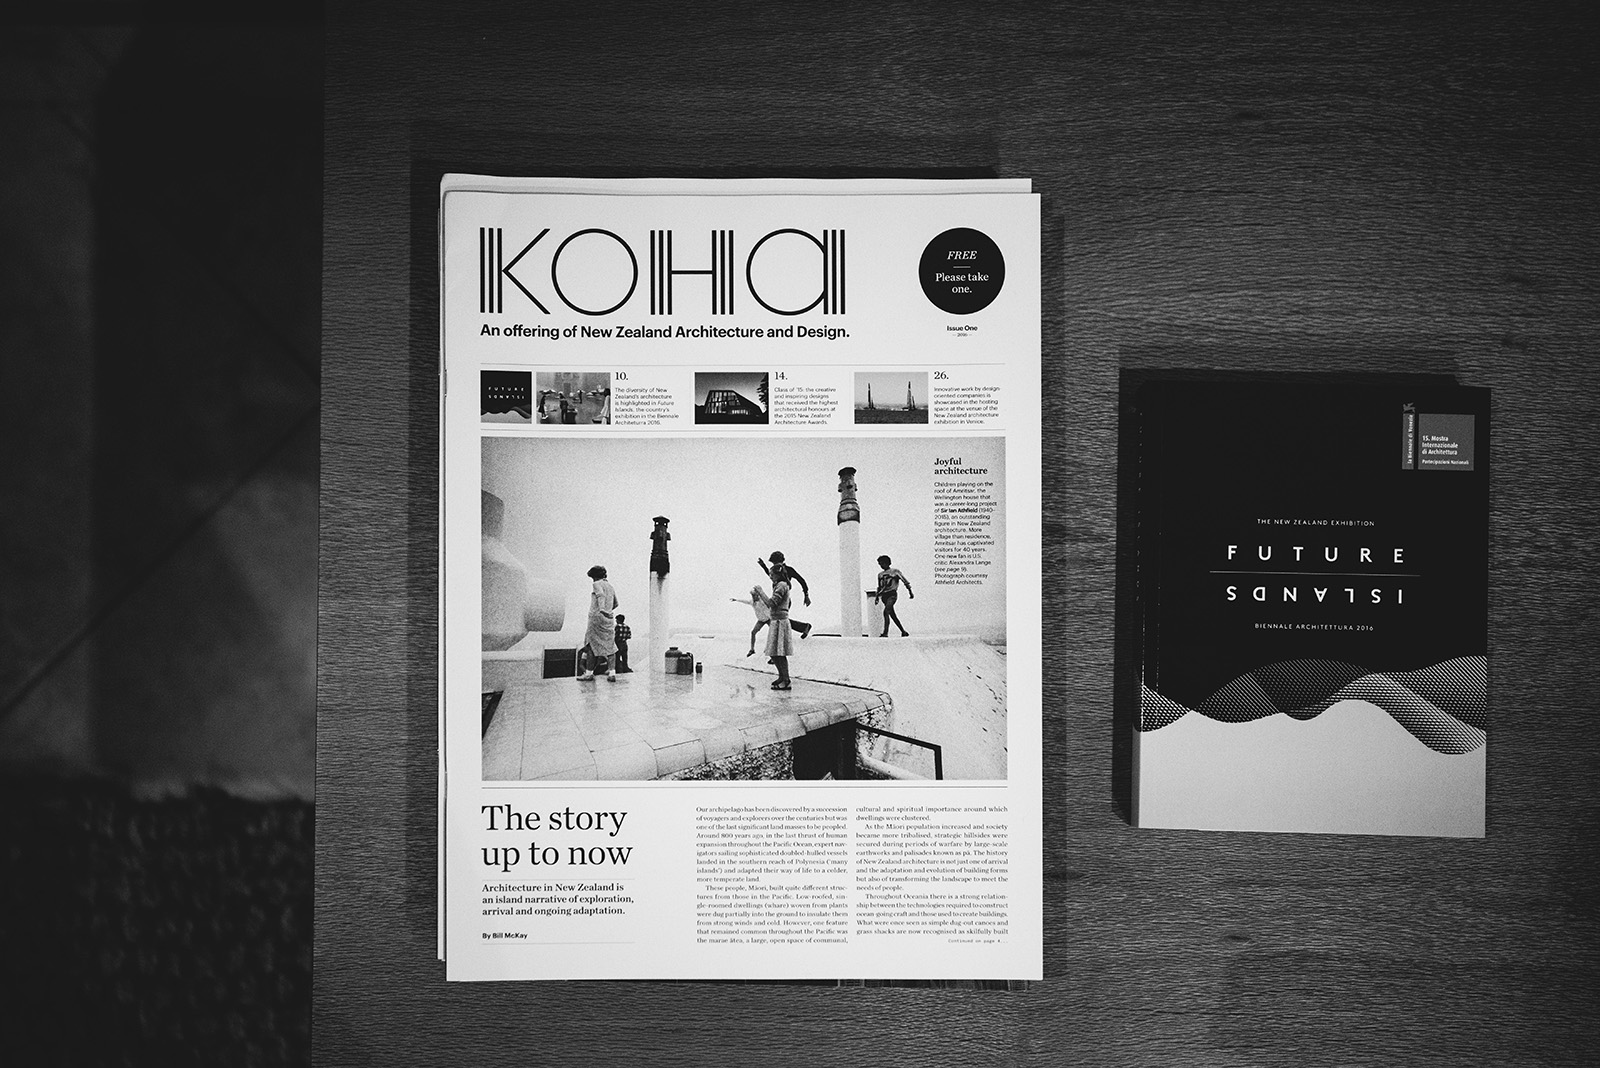 'Koha', published by the New Zealand Institute of Architects